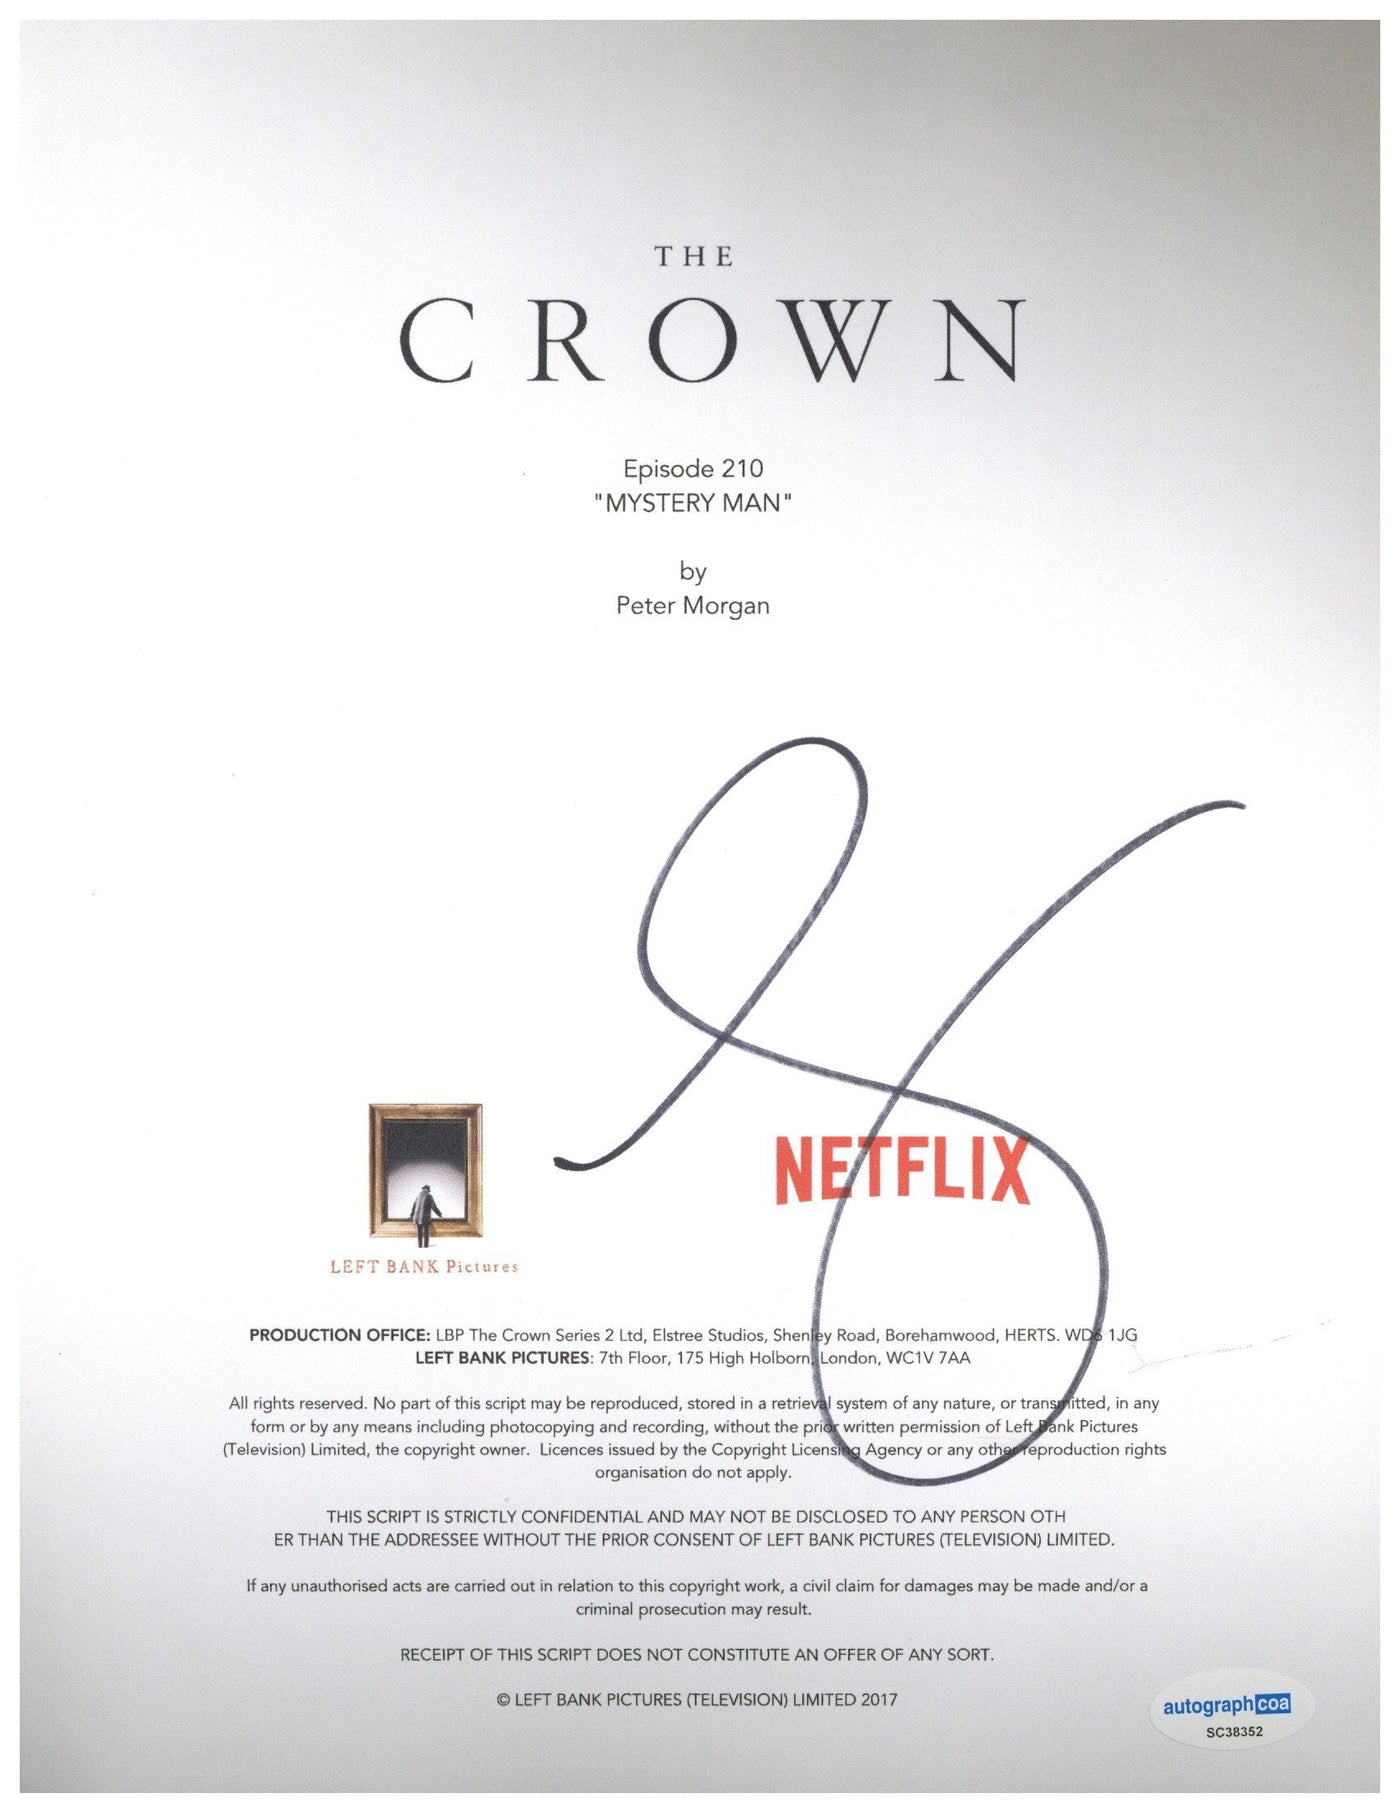 Claire Foy Signed Script Cover The Crown Autographed JSA COA